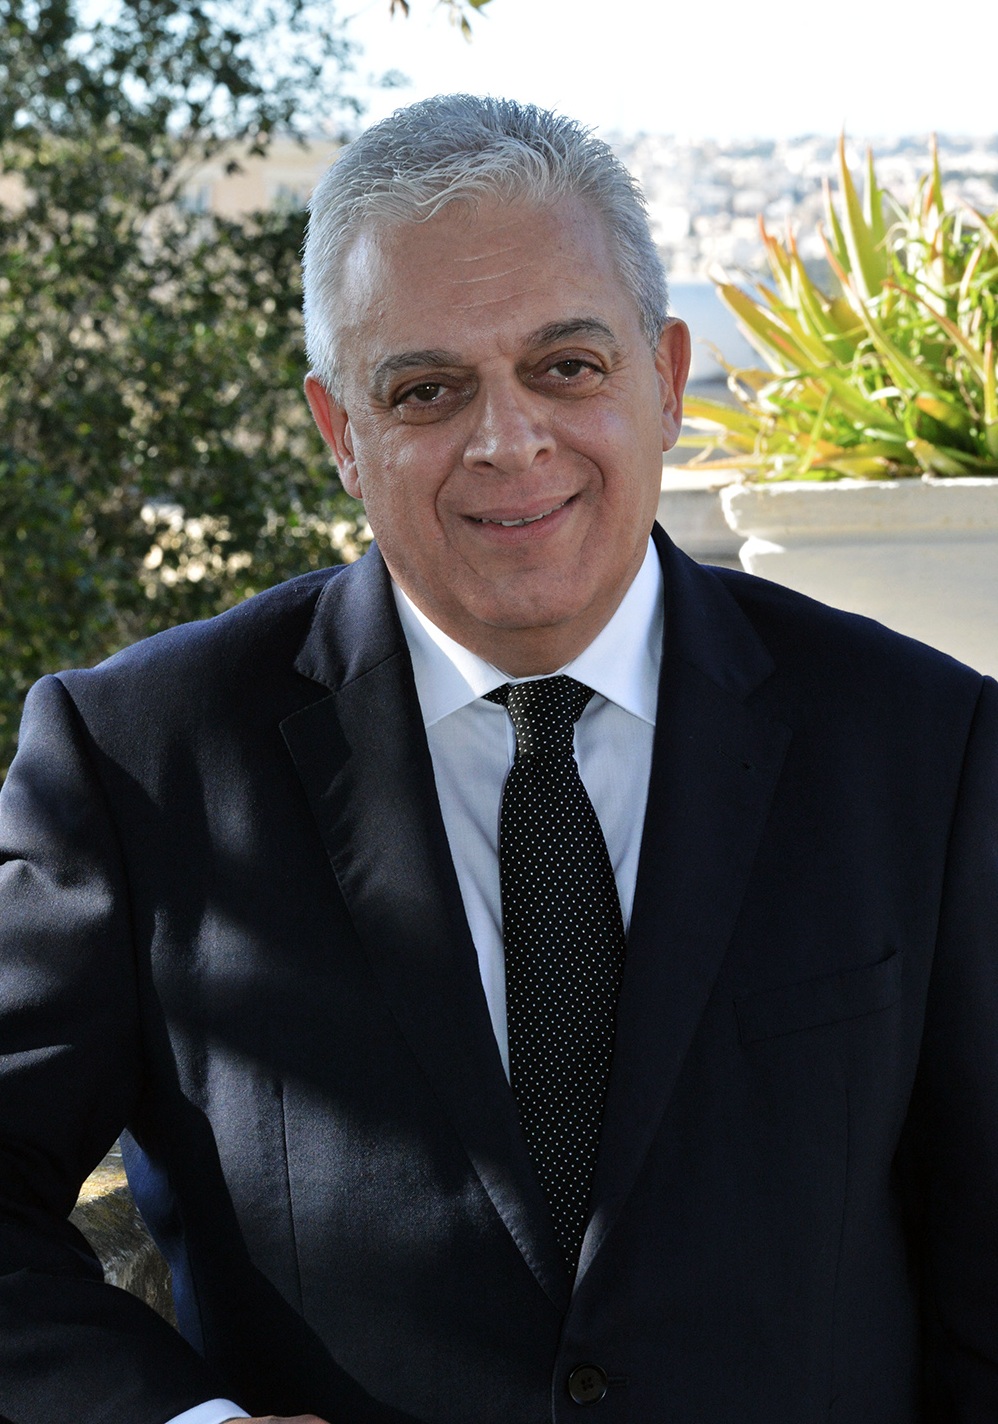 Ray Azzopardi, Ambassador of Malta to Belgium